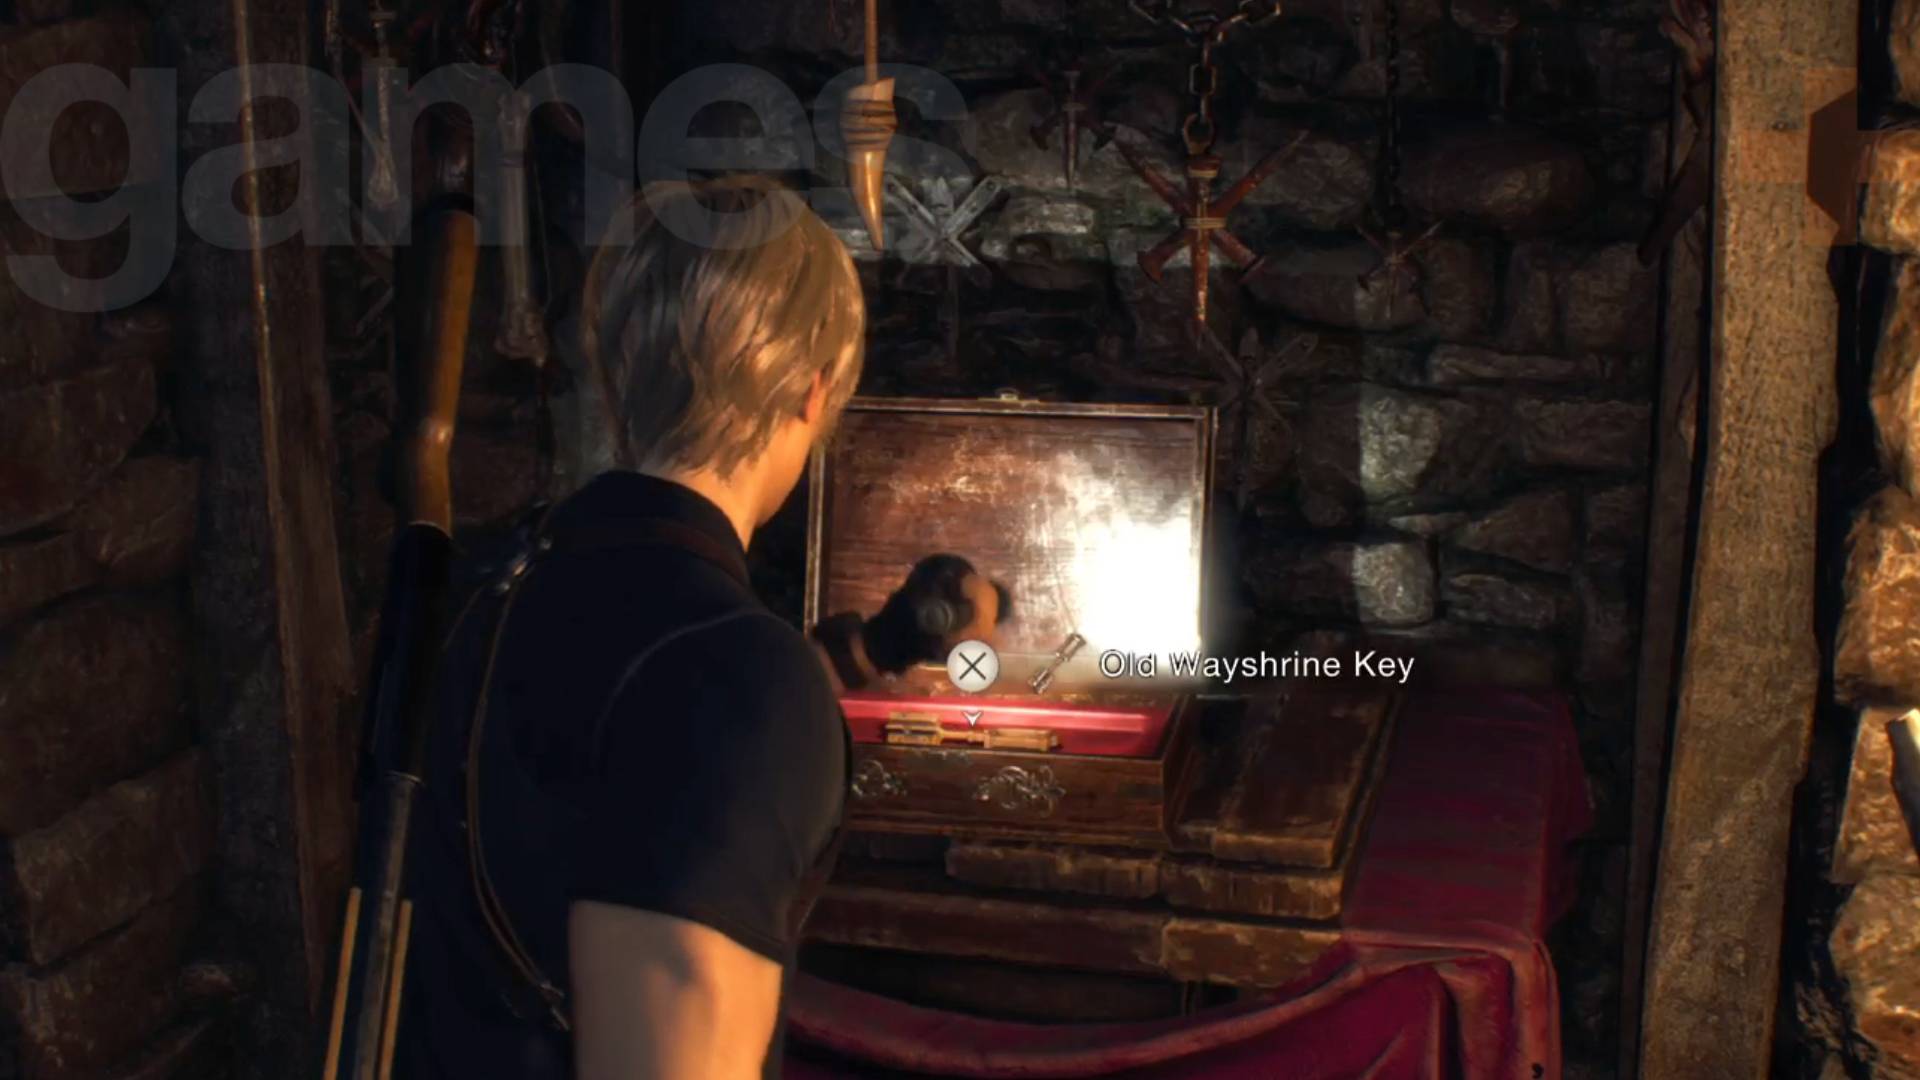 How to get the Resident Evil 4 Wayshrine key